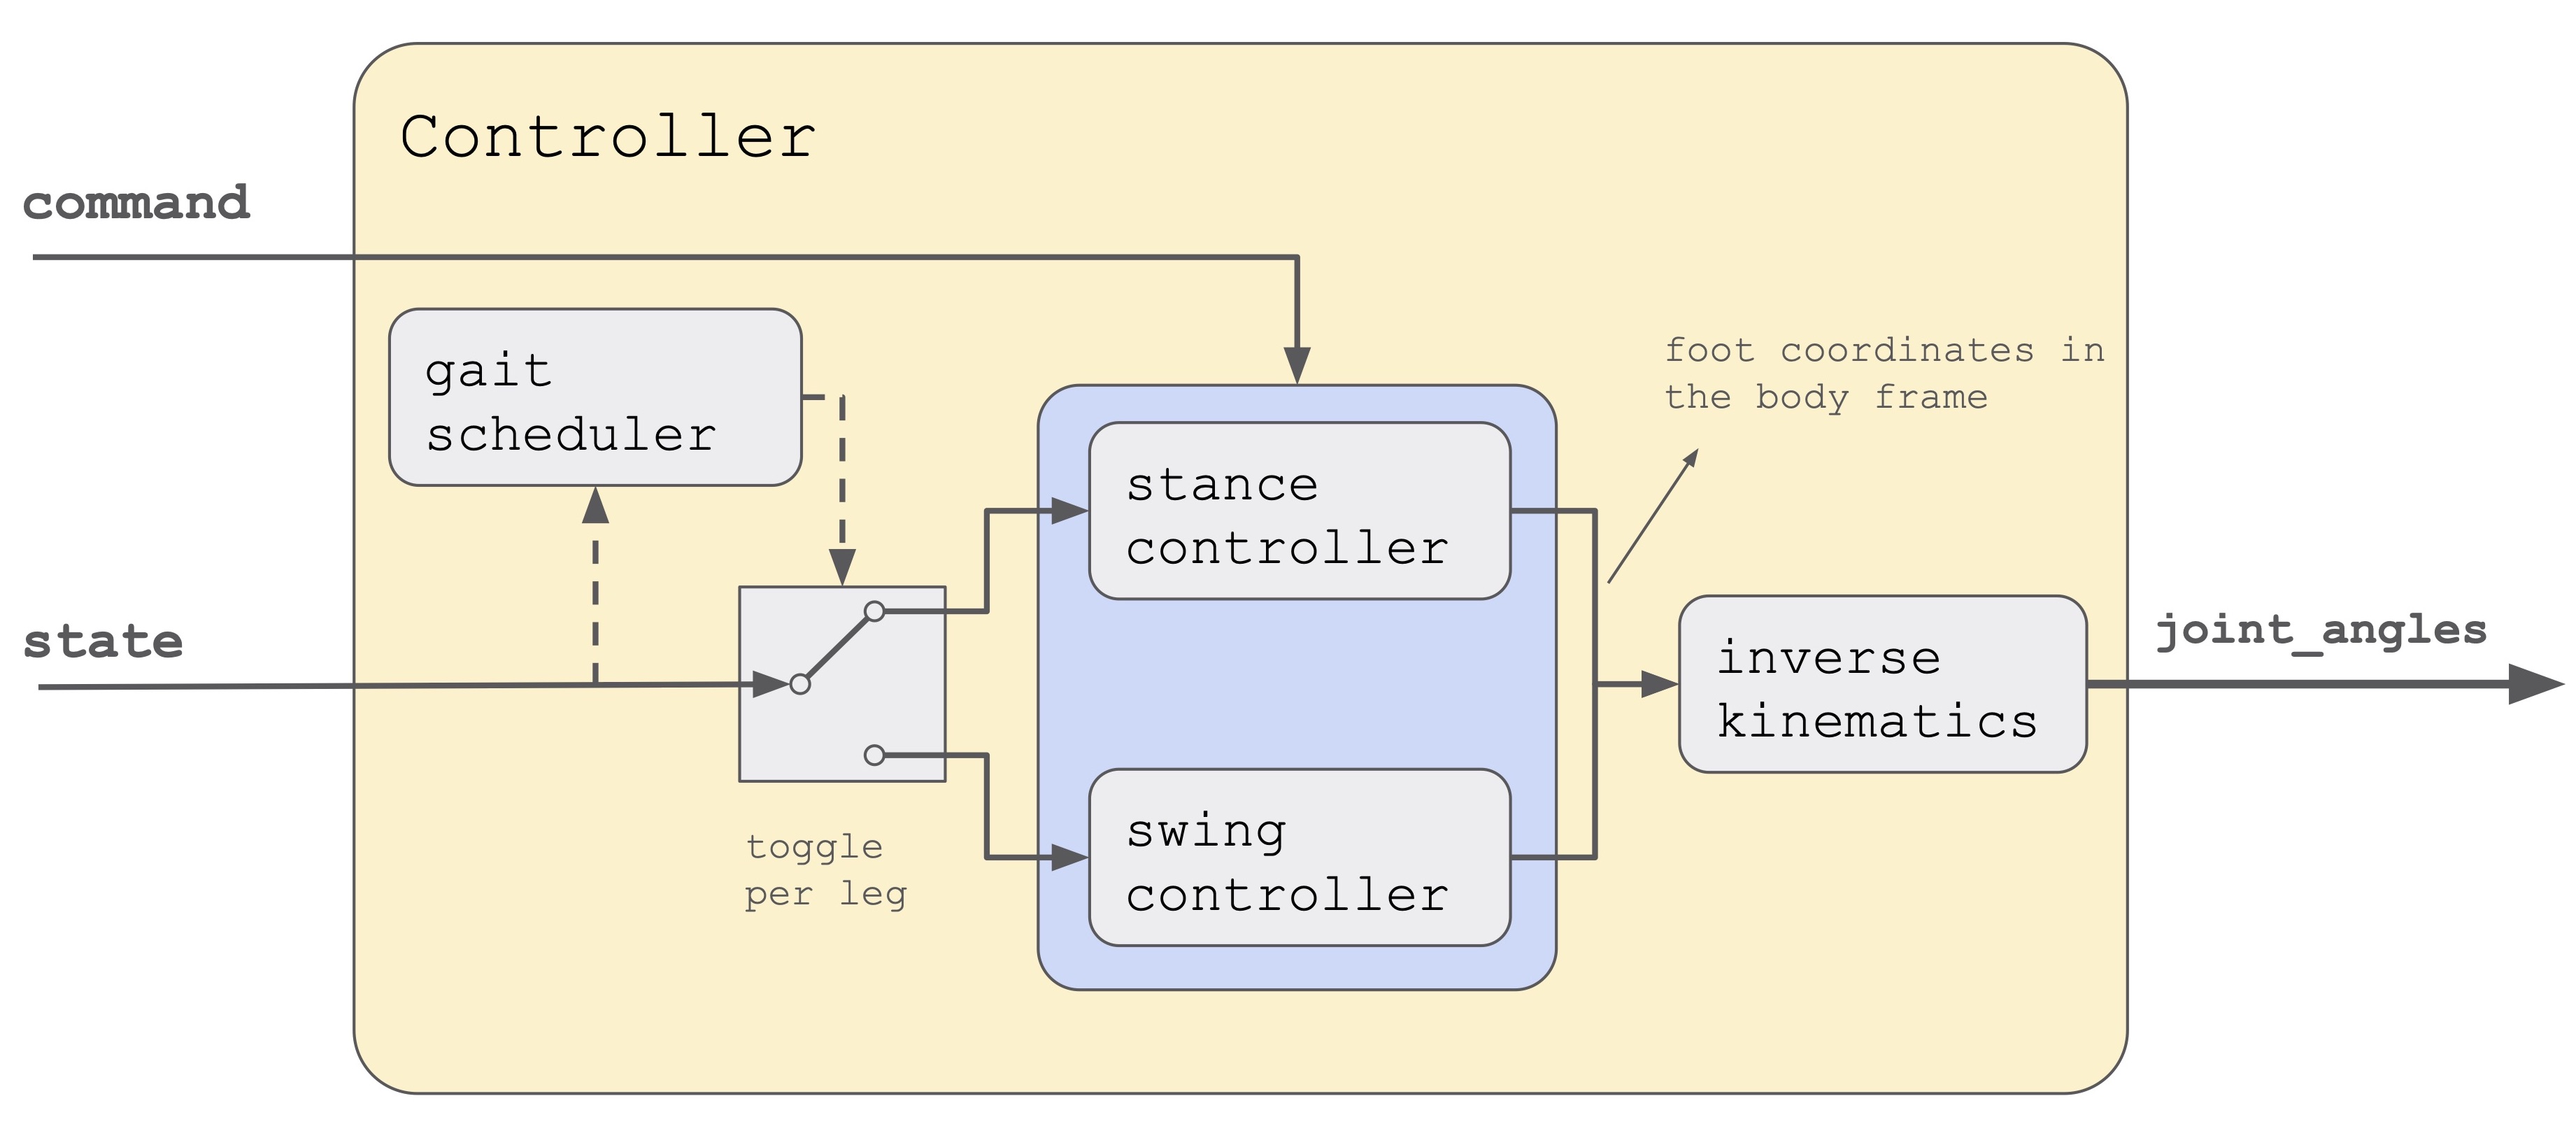 Controller diagram